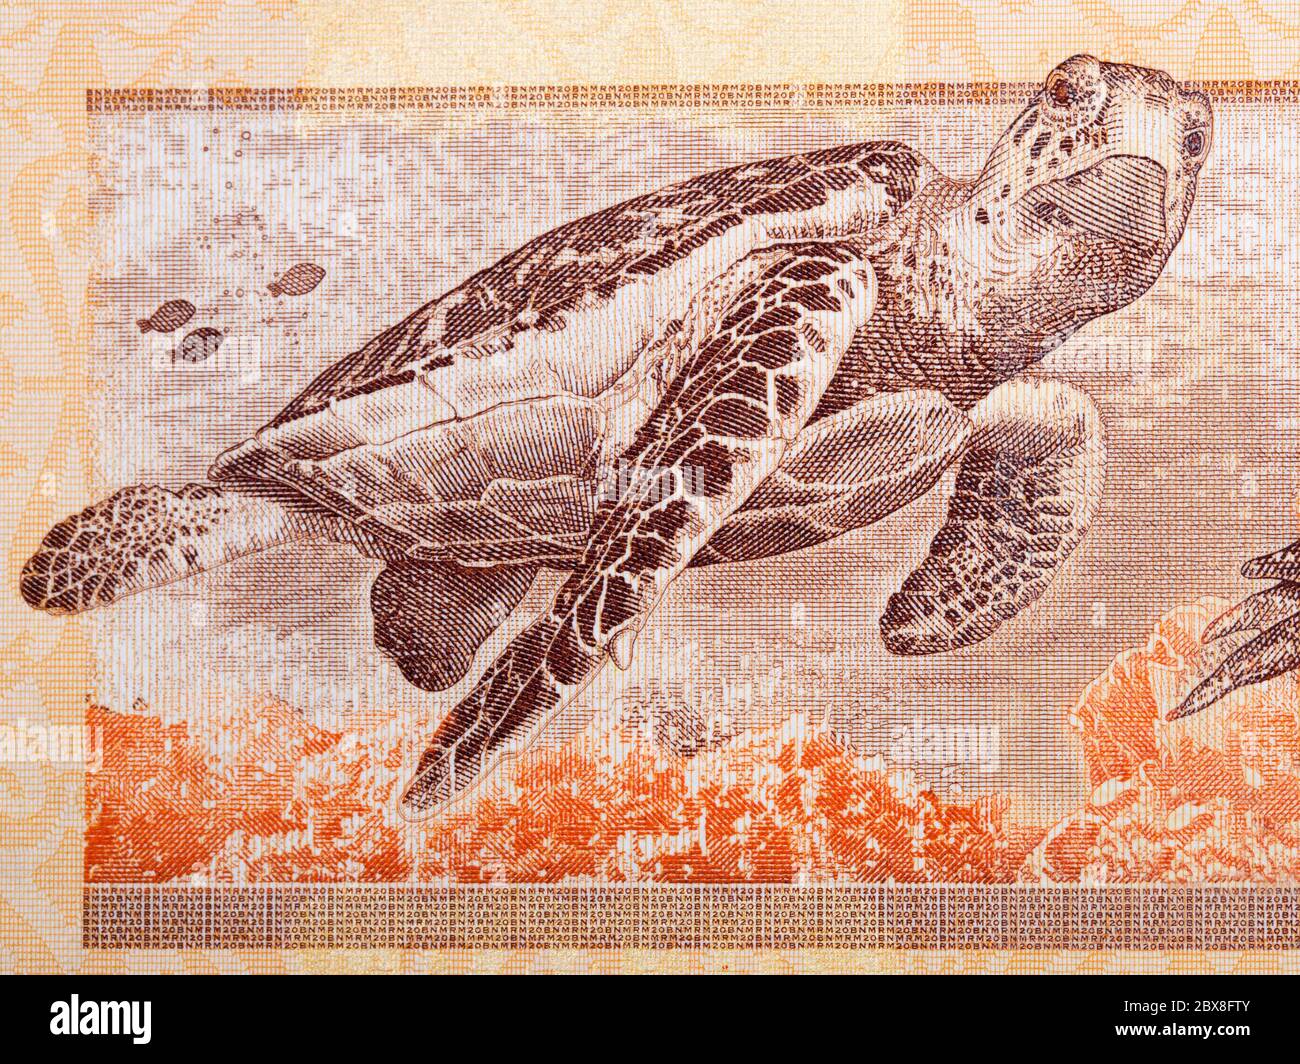 Hawksbill sea turtle a portrait from Malaysian money Stock Photo